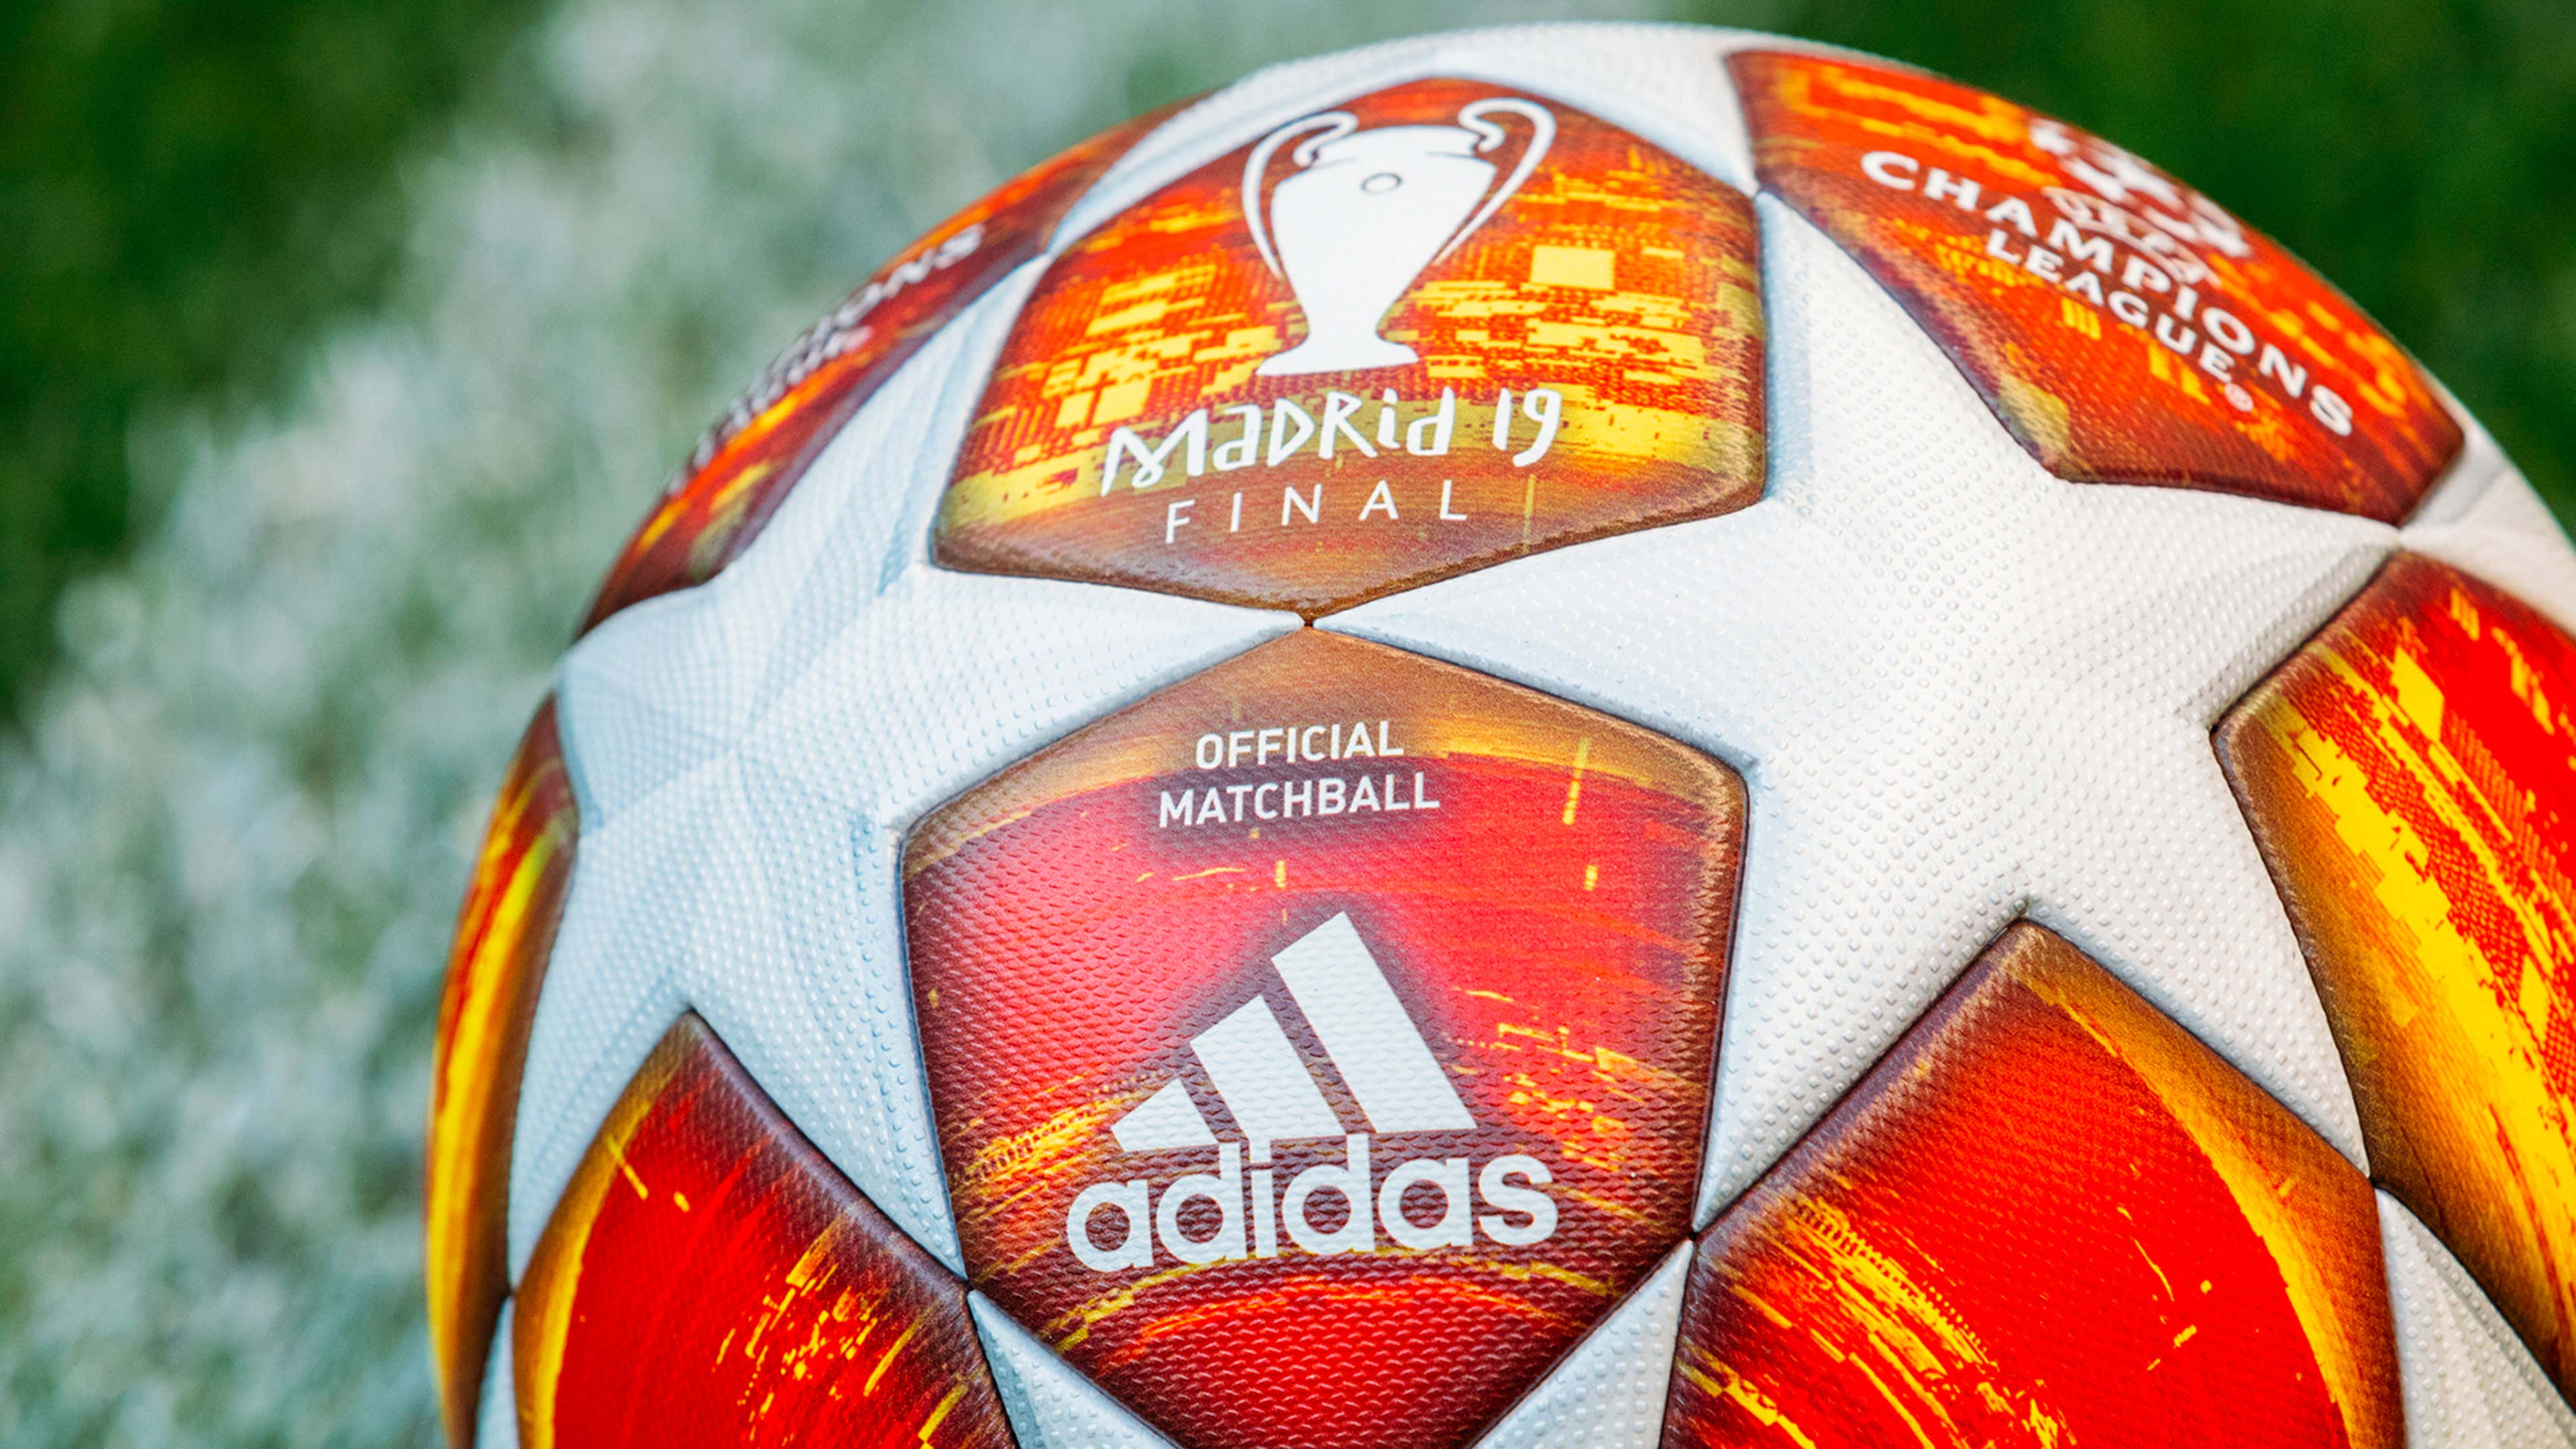 ADIDAS UEFA CHAMPIONS LEAGUE OFFICIAL MATCH BALL 2018-19